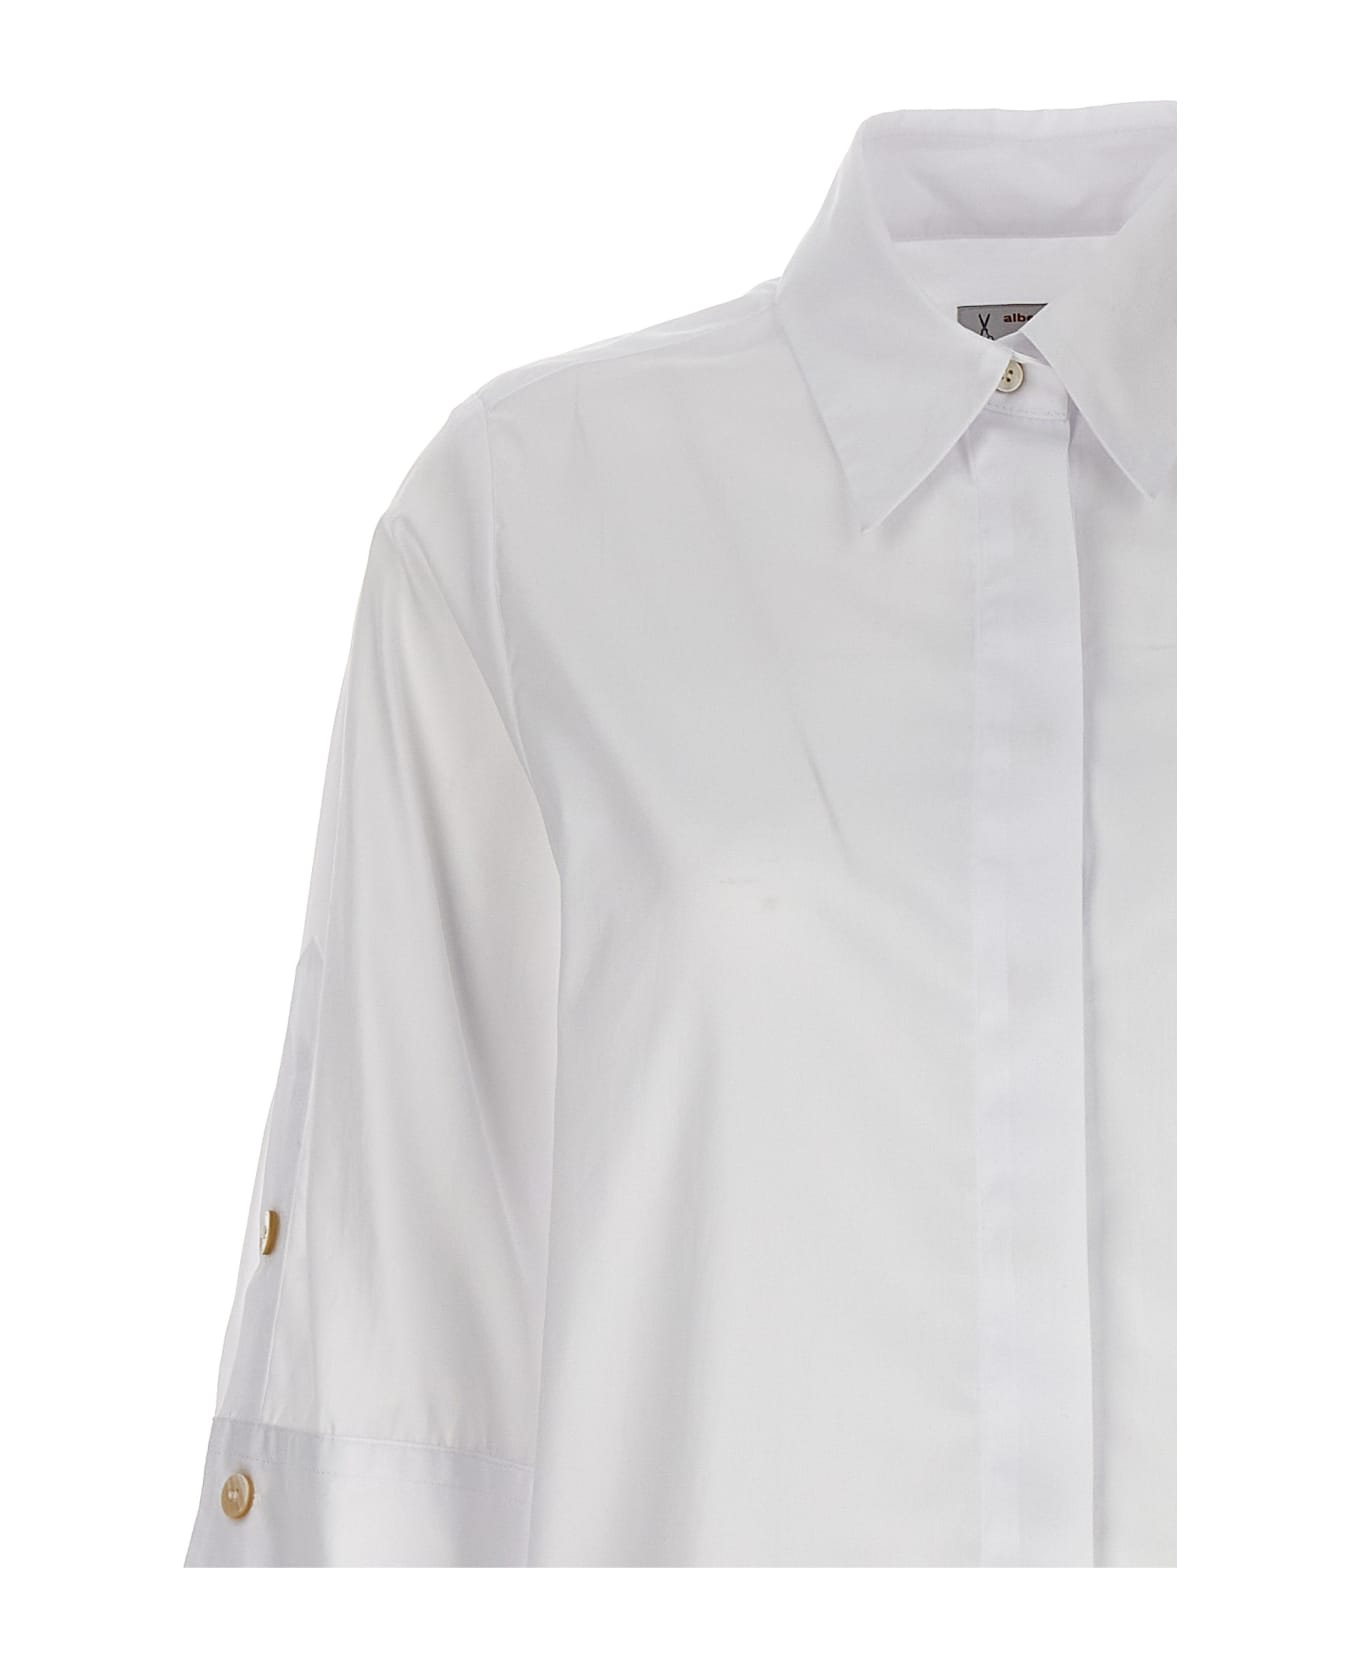 Alberto Biani Poplin Shirt - White